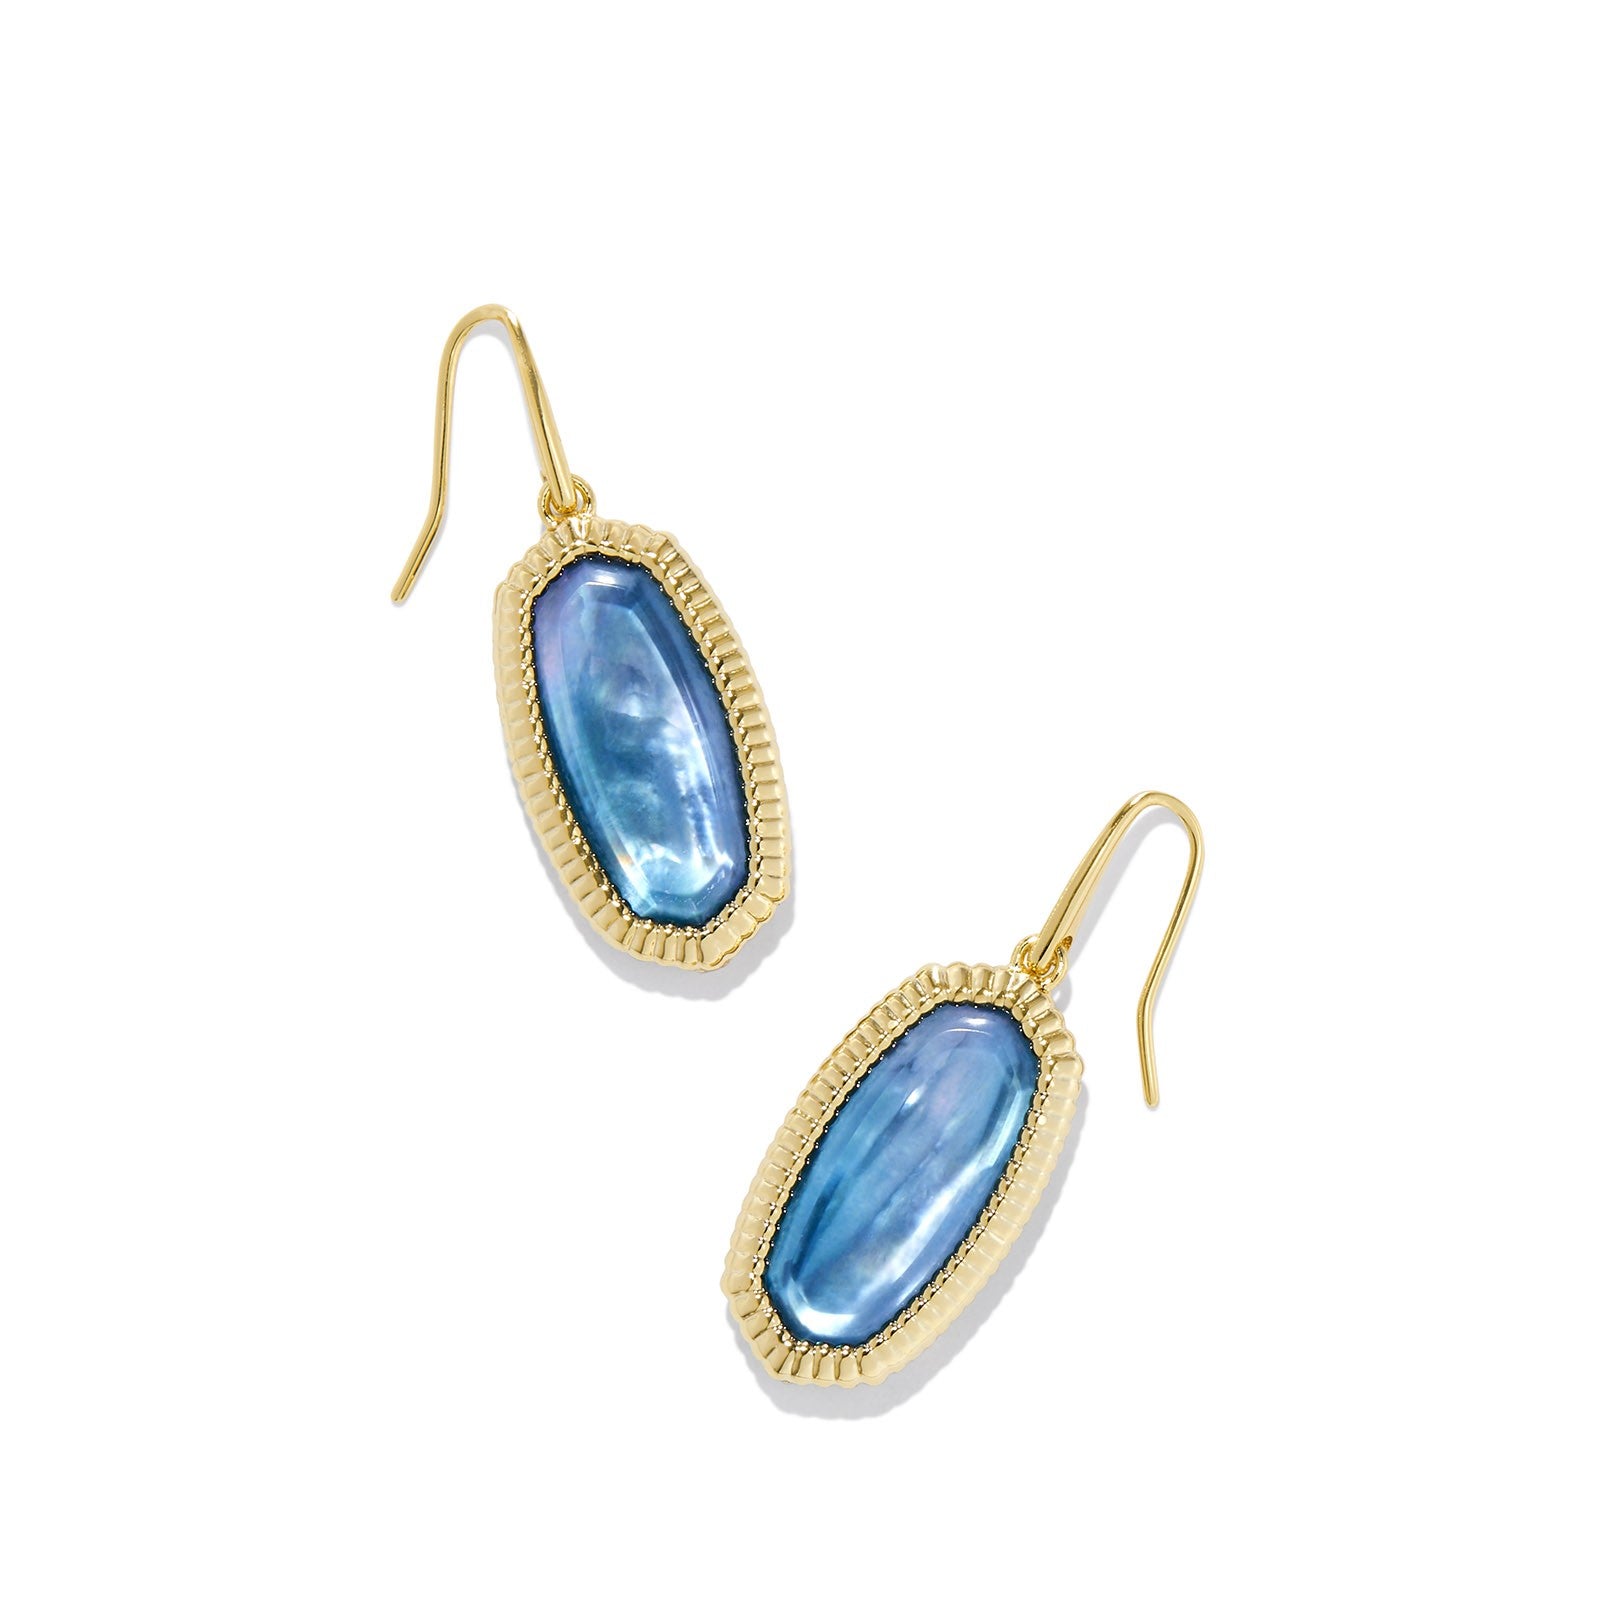 Kendra Scott | Dani Gold Ridge Frame Drop Earrings in Indigo Watercolor Illusion - Giddy Up Glamour Boutique